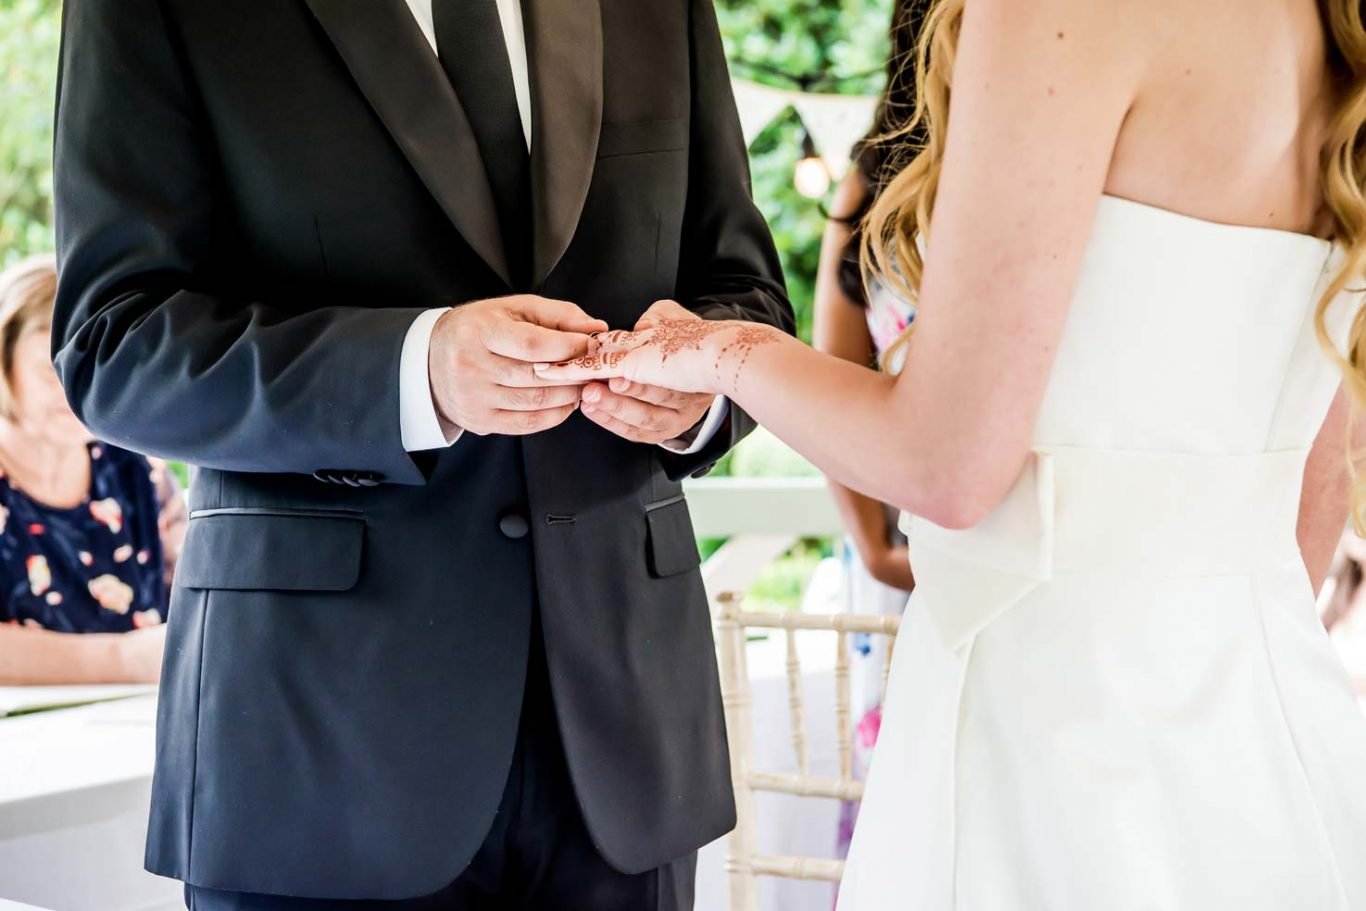 exchnaging rings wedding Ascot bride and groom